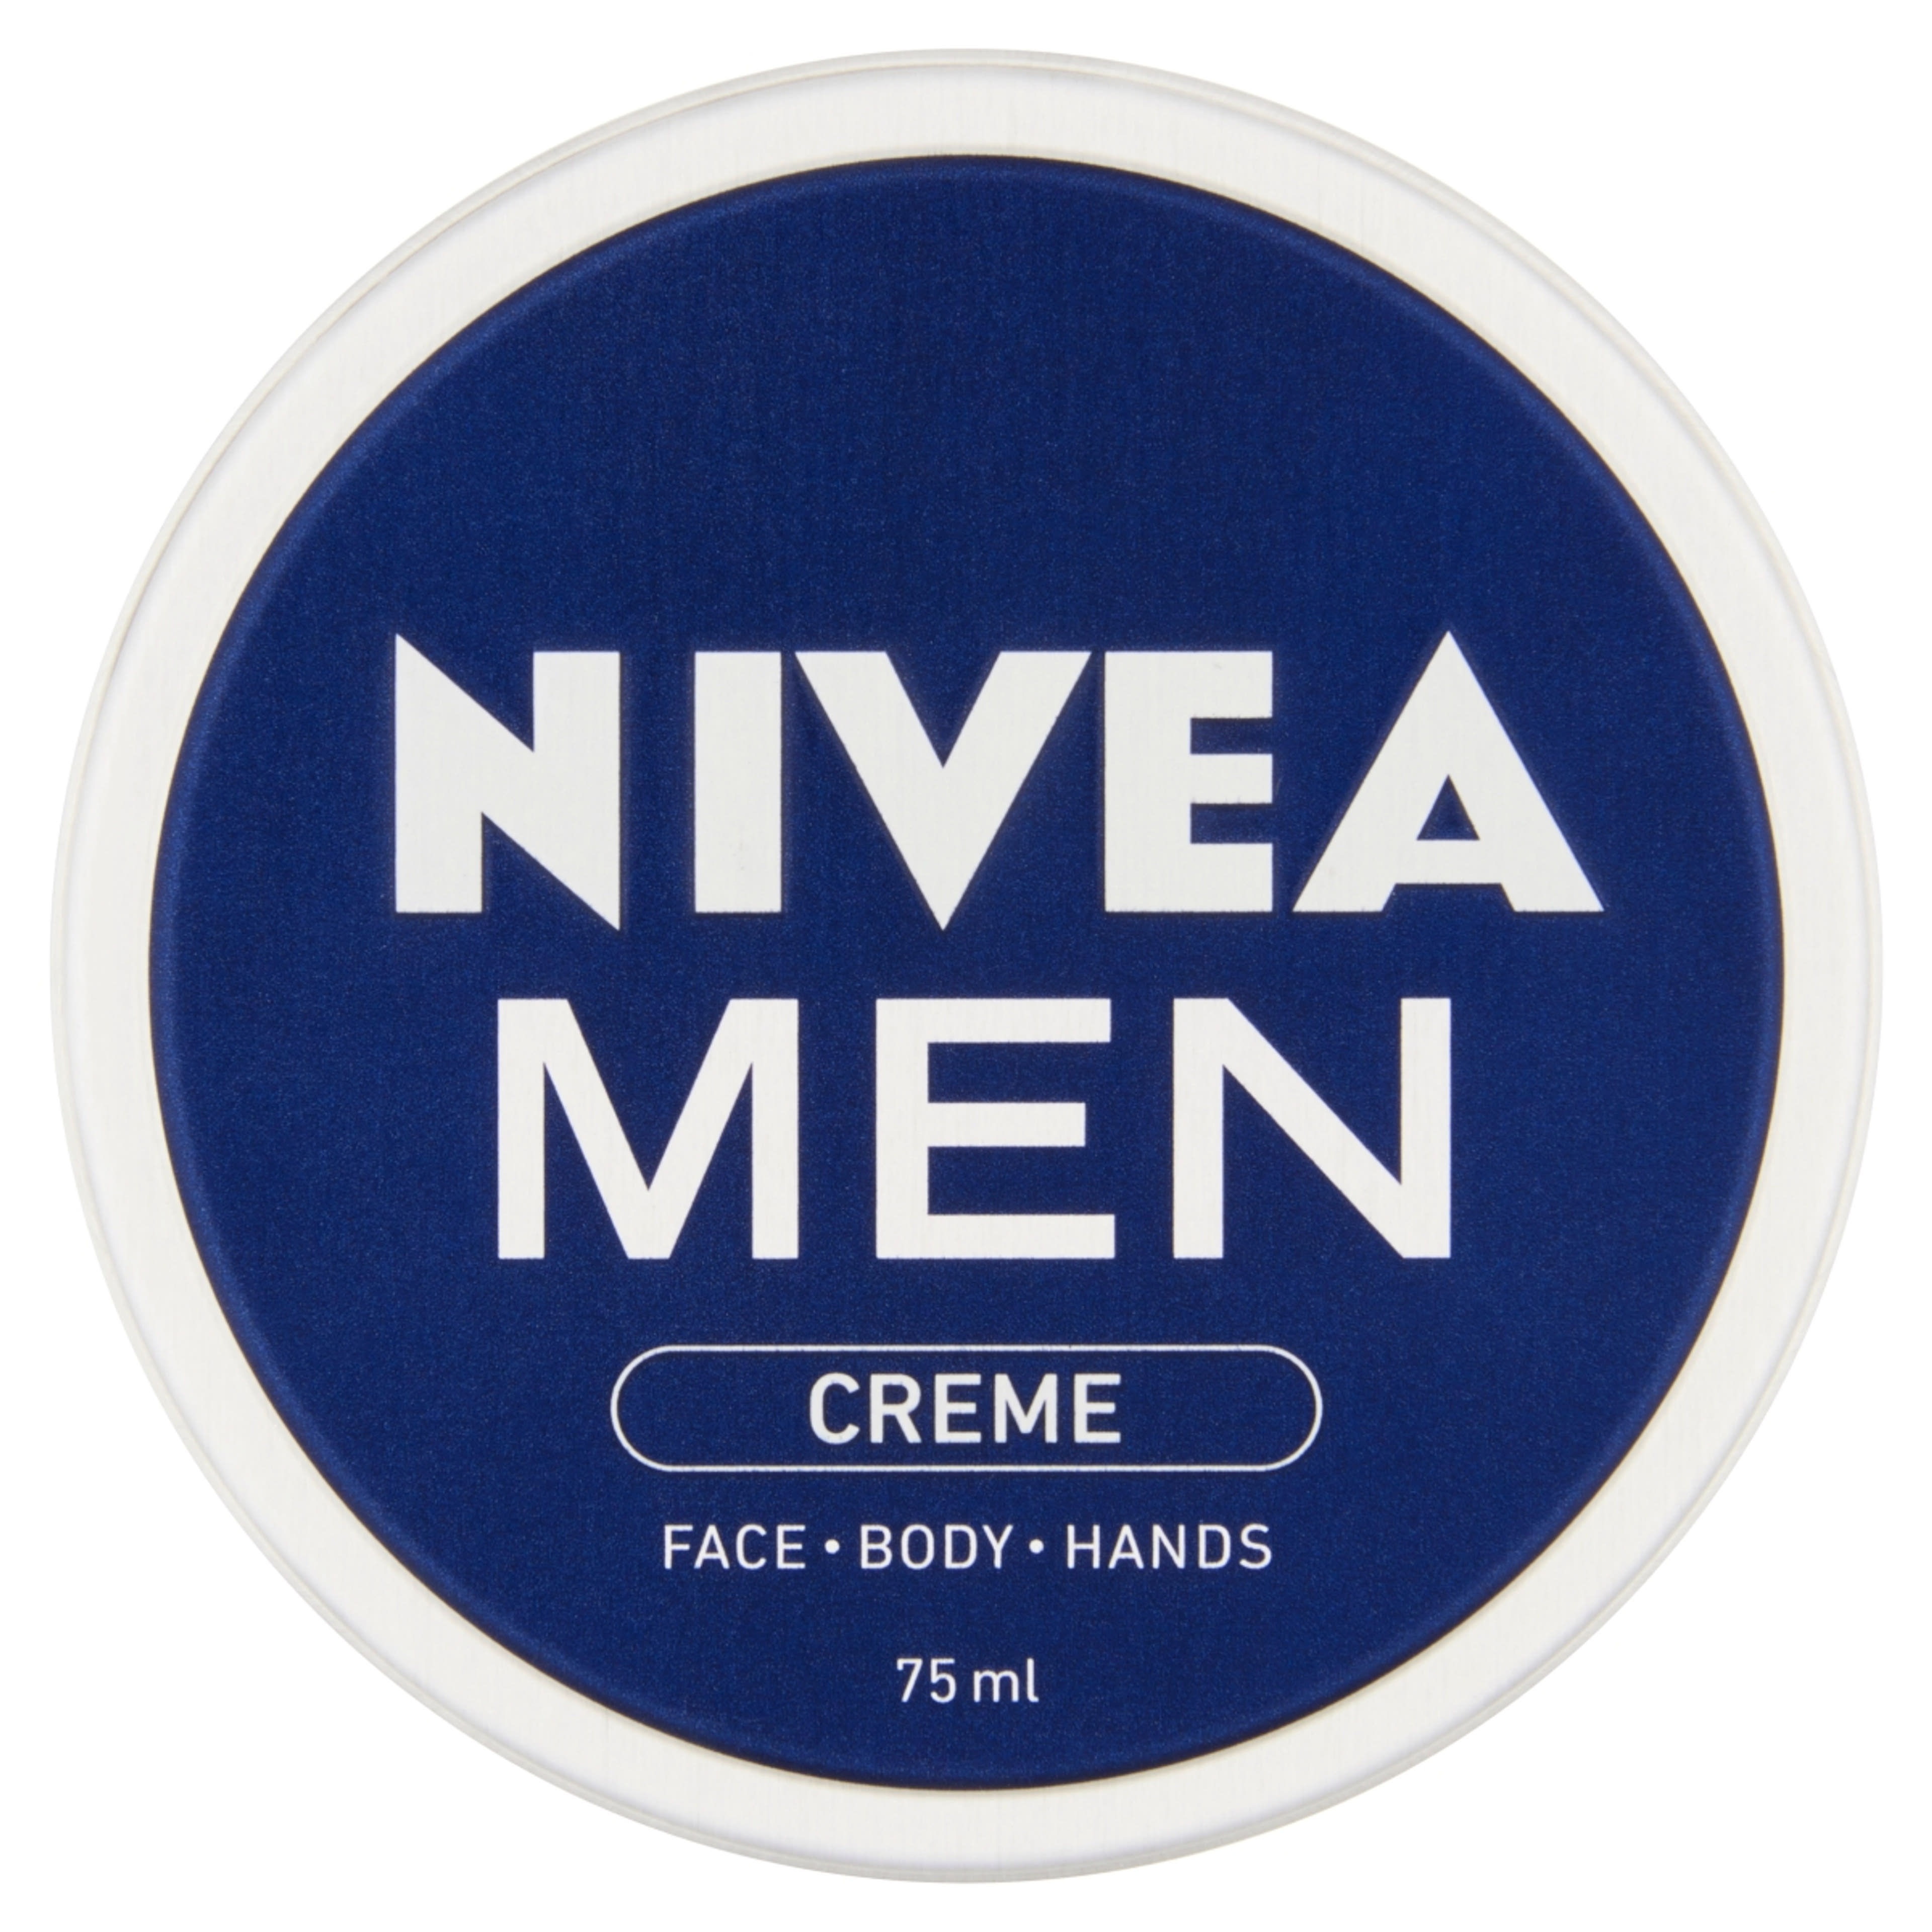 NIVEA MEN Creme - 75 ml-1